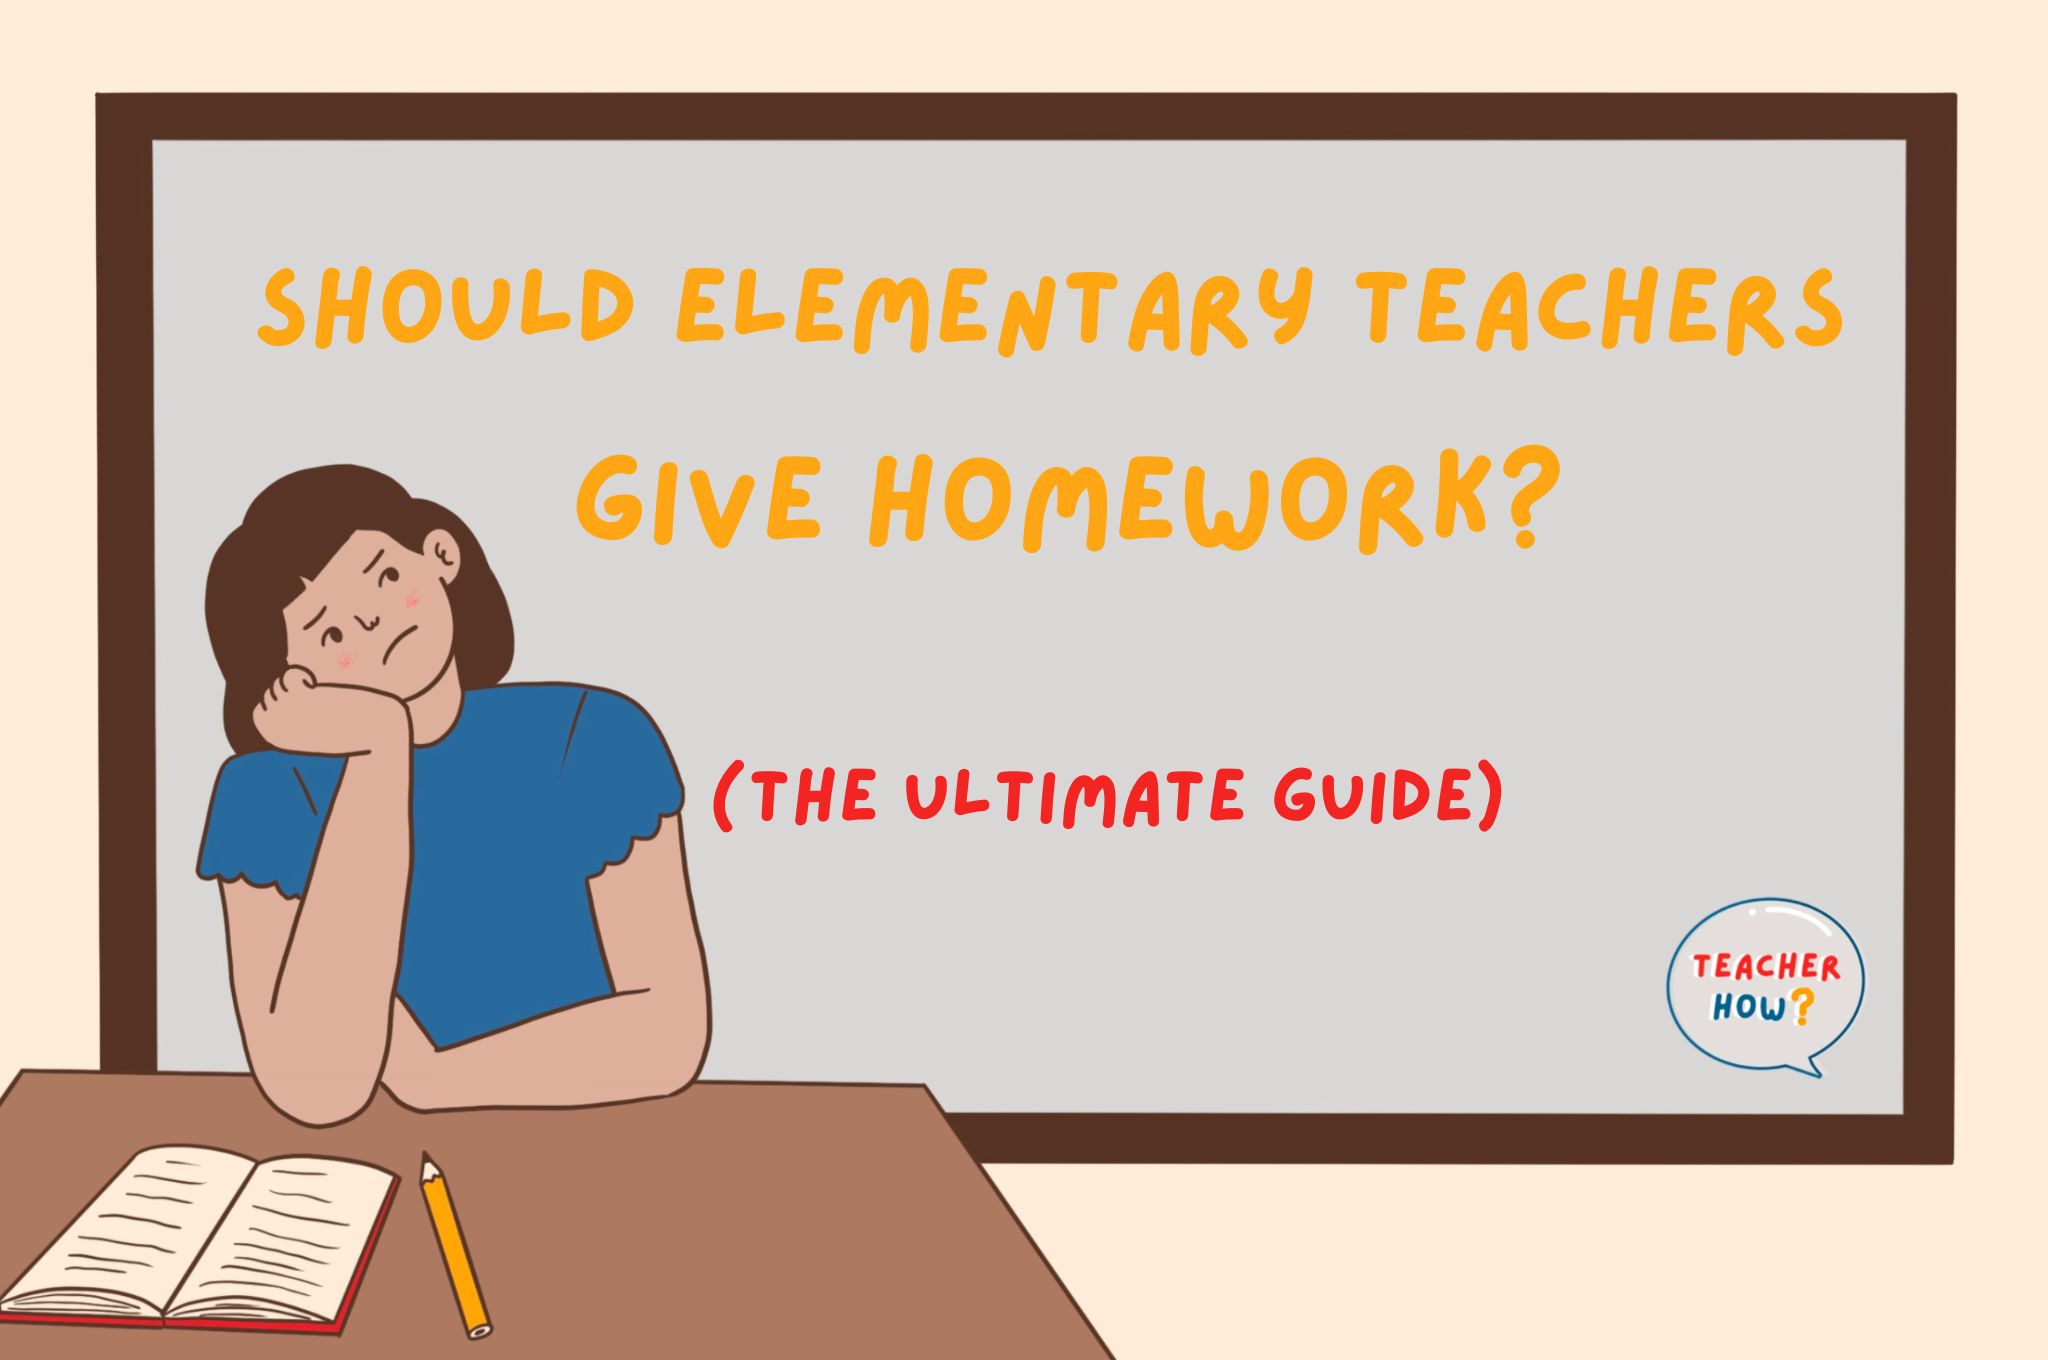 teachers should give homework